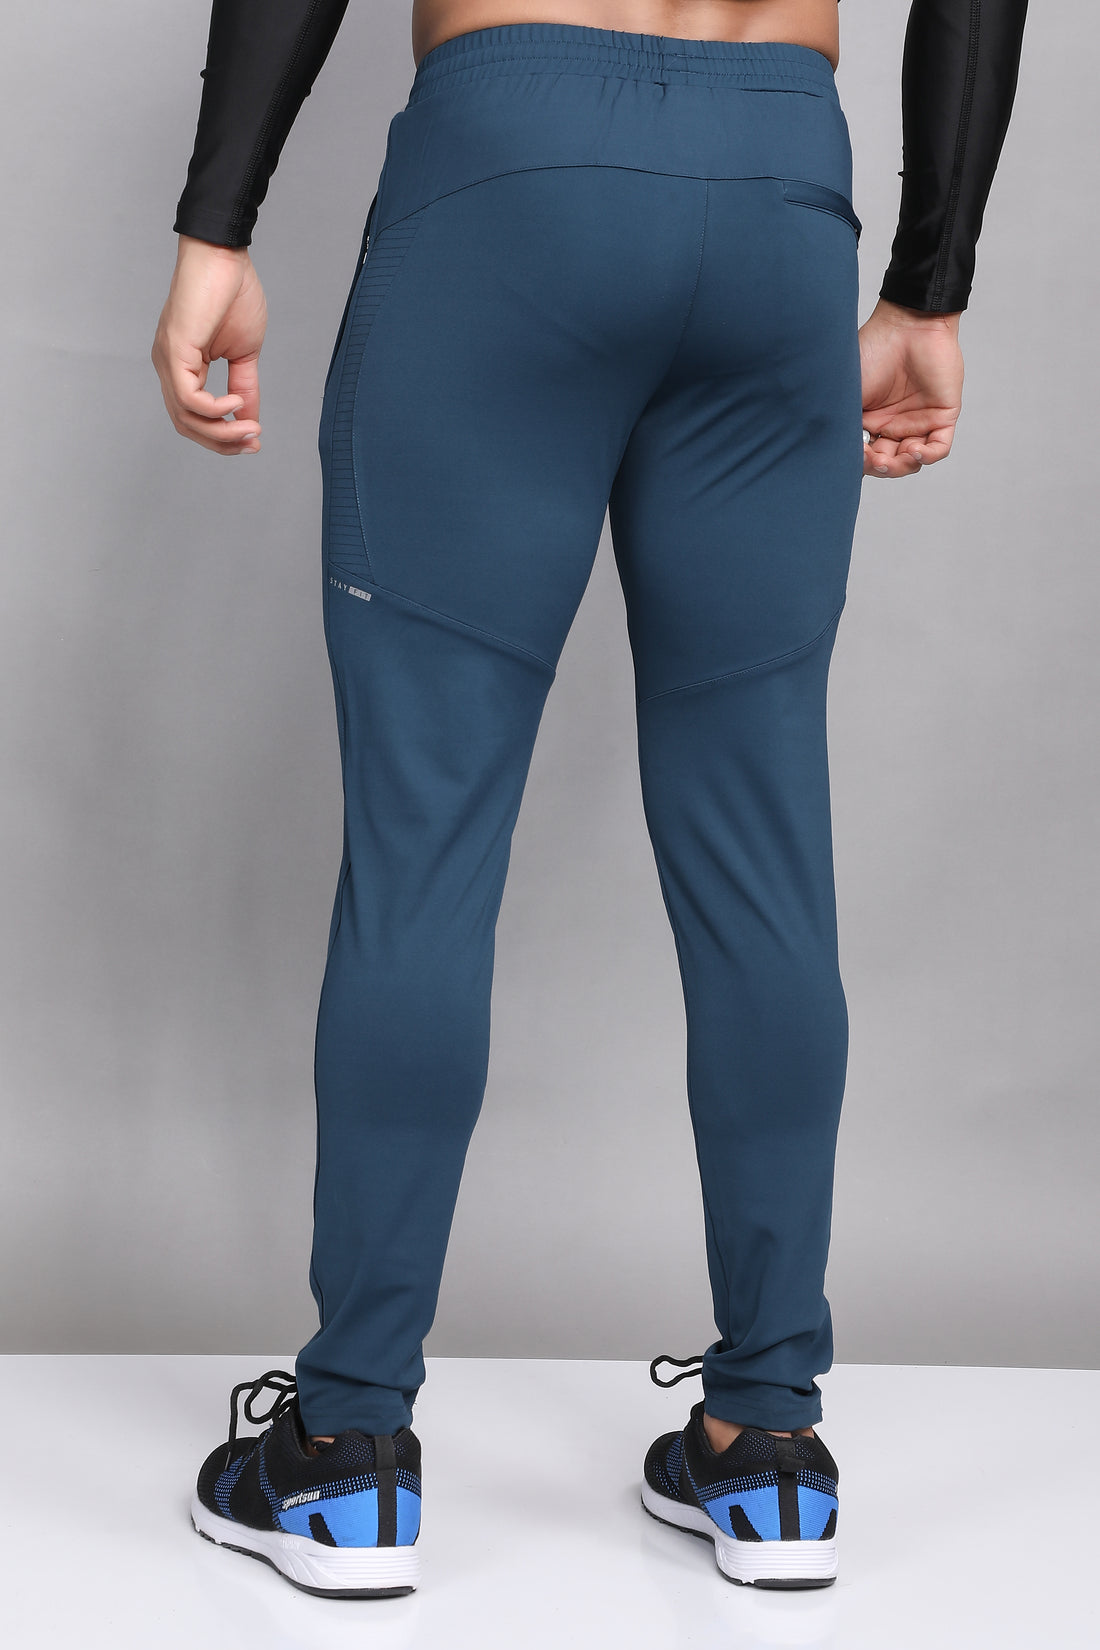 Buy Navy Blue Track Pants for Men by Incite Online | Ajio.com